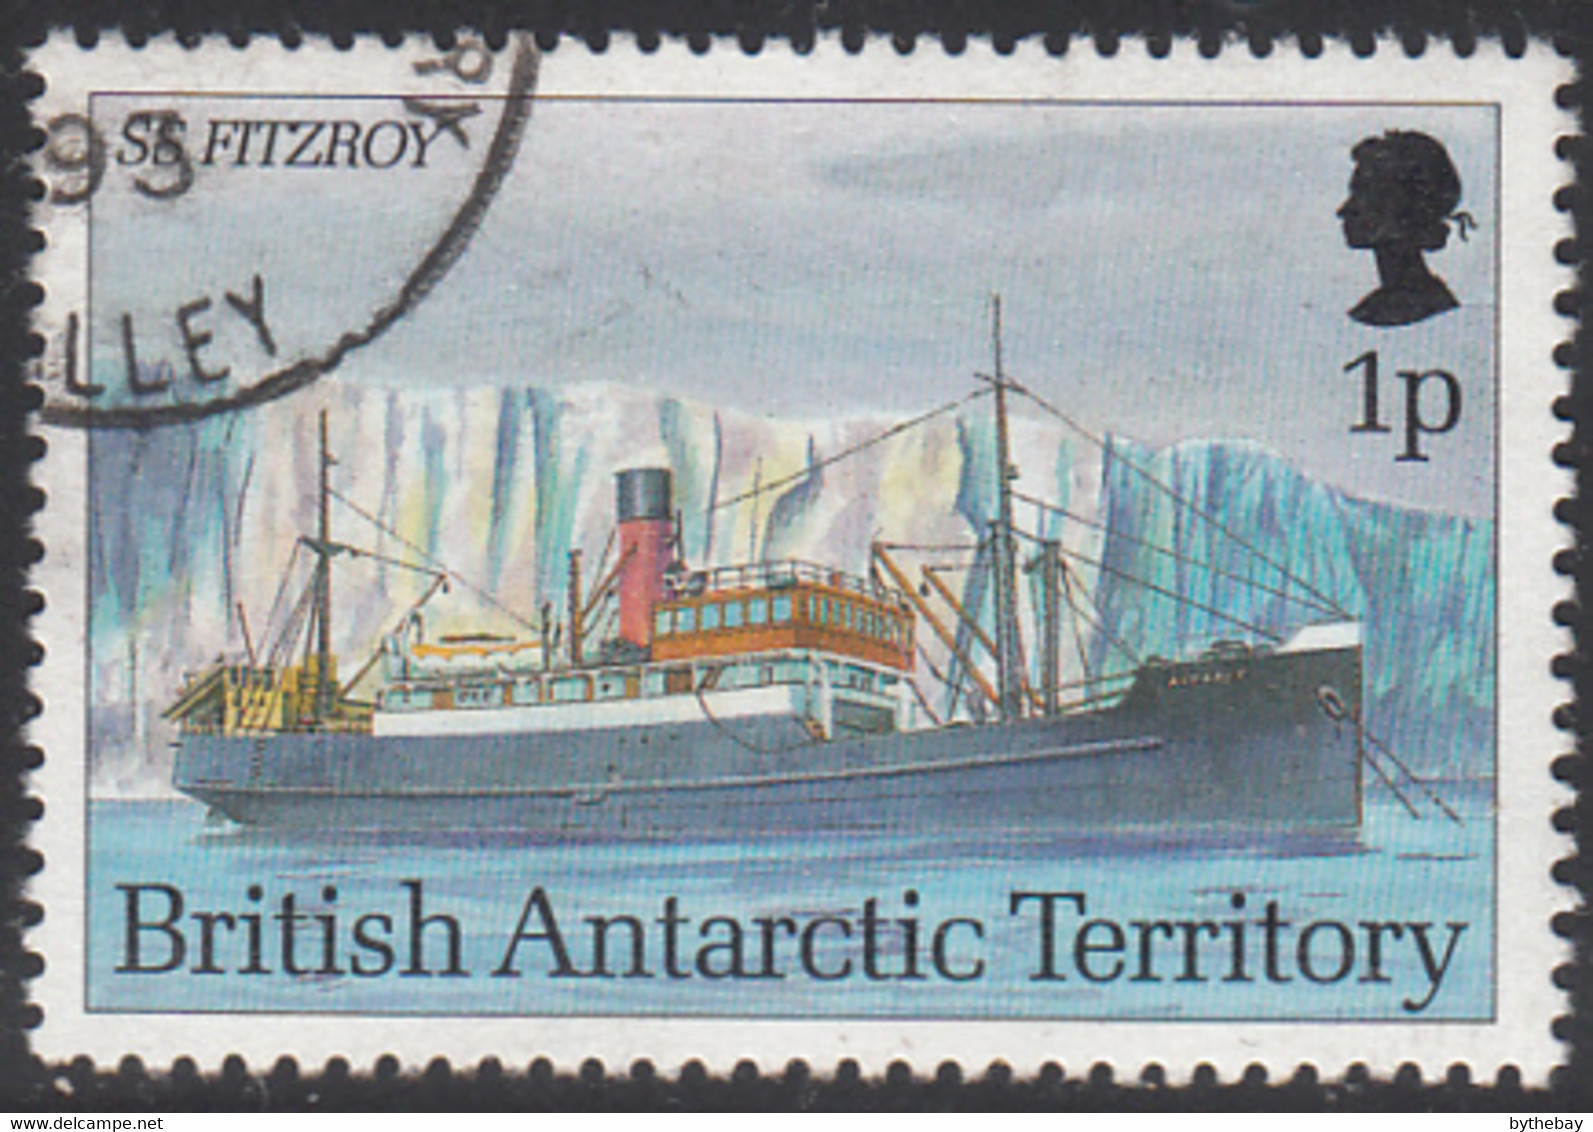 British Antarctic Territory 1993 Used Sc #202 1p SS Fitzroy Research Ships - Gebruikt